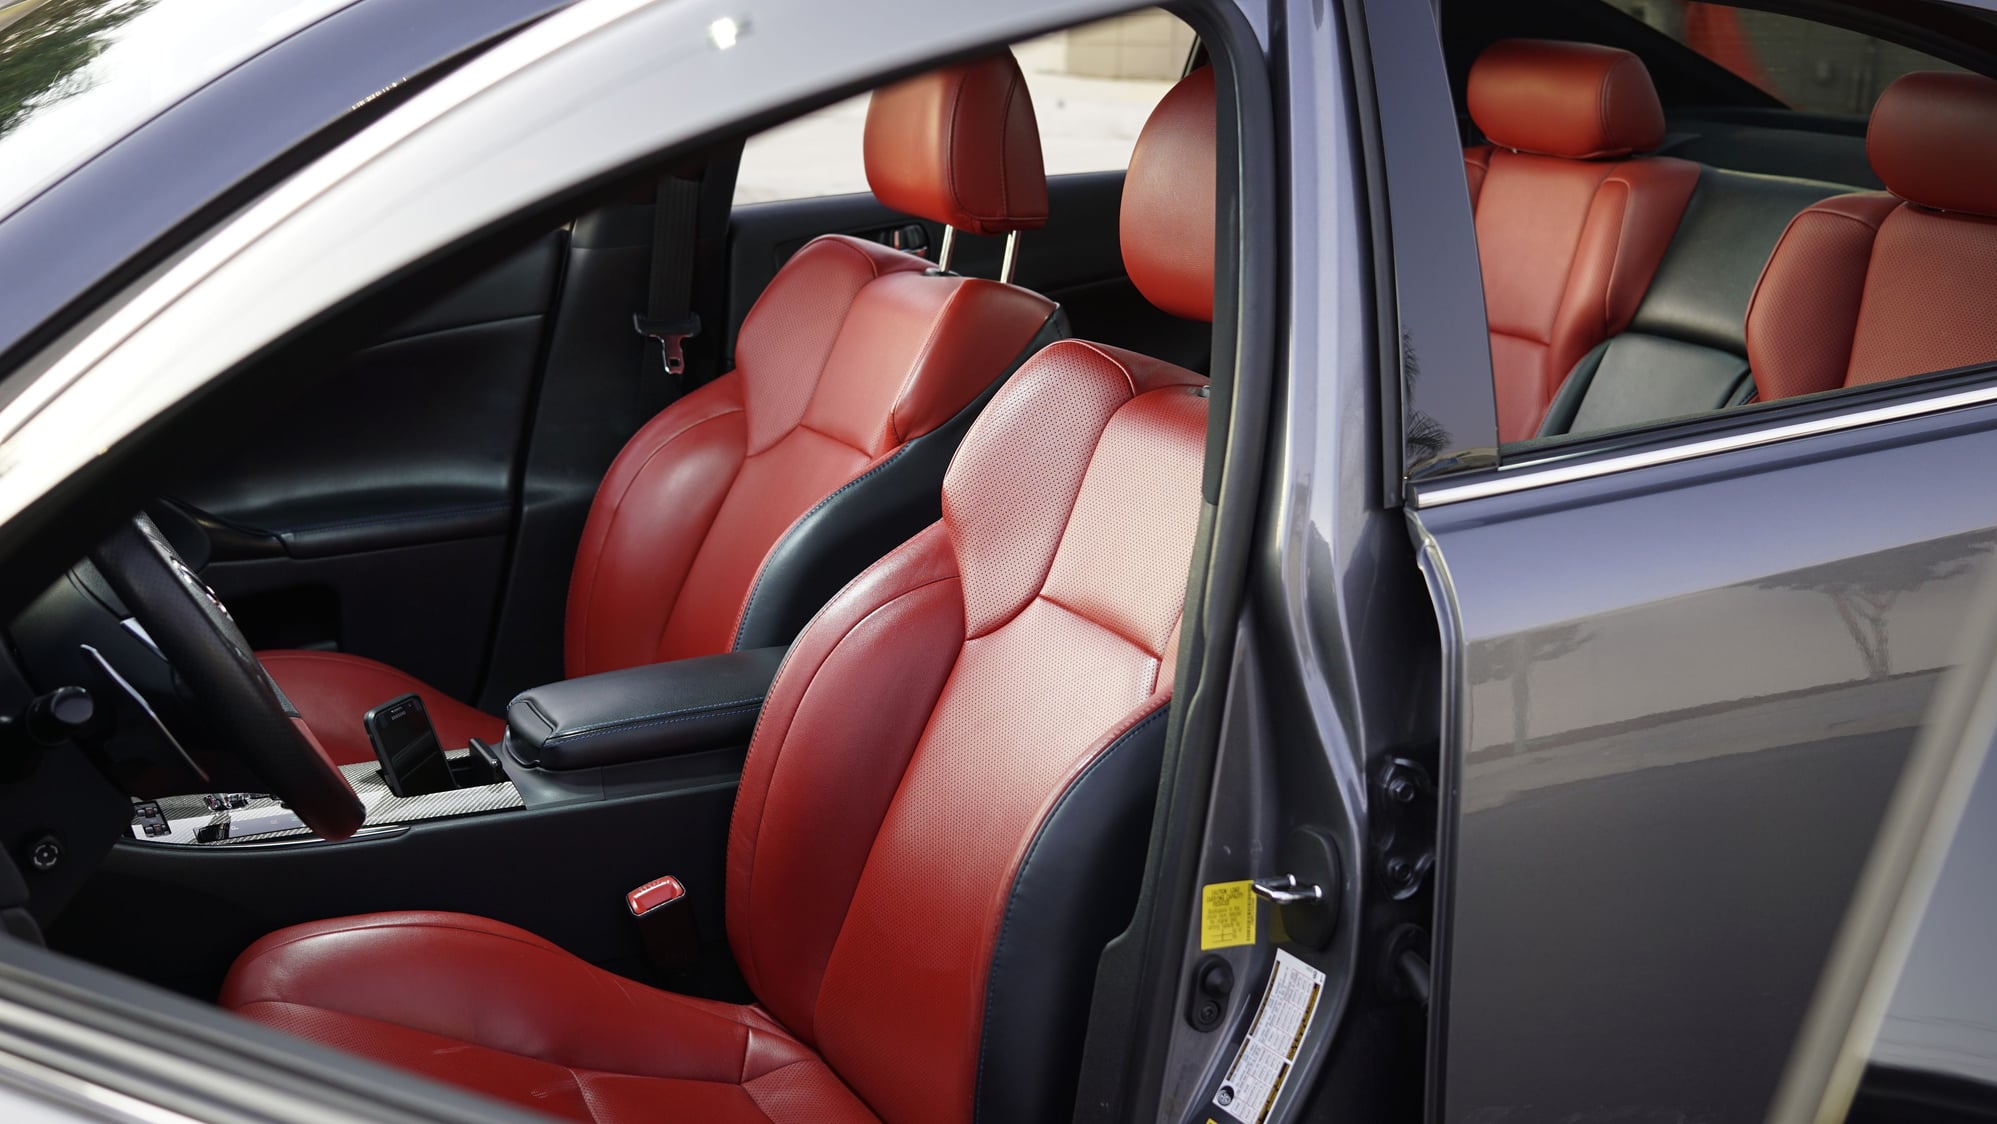 2012 Lexus IS F - Mint 2012 IS-F 59k miles Nebula Gray w/ RED interior - Used - VIN JTHBP5C21C5010489 - 60,000 Miles - 8 cyl - 2WD - Automatic - Sedan - Gray - Covina, CA 91723, United States